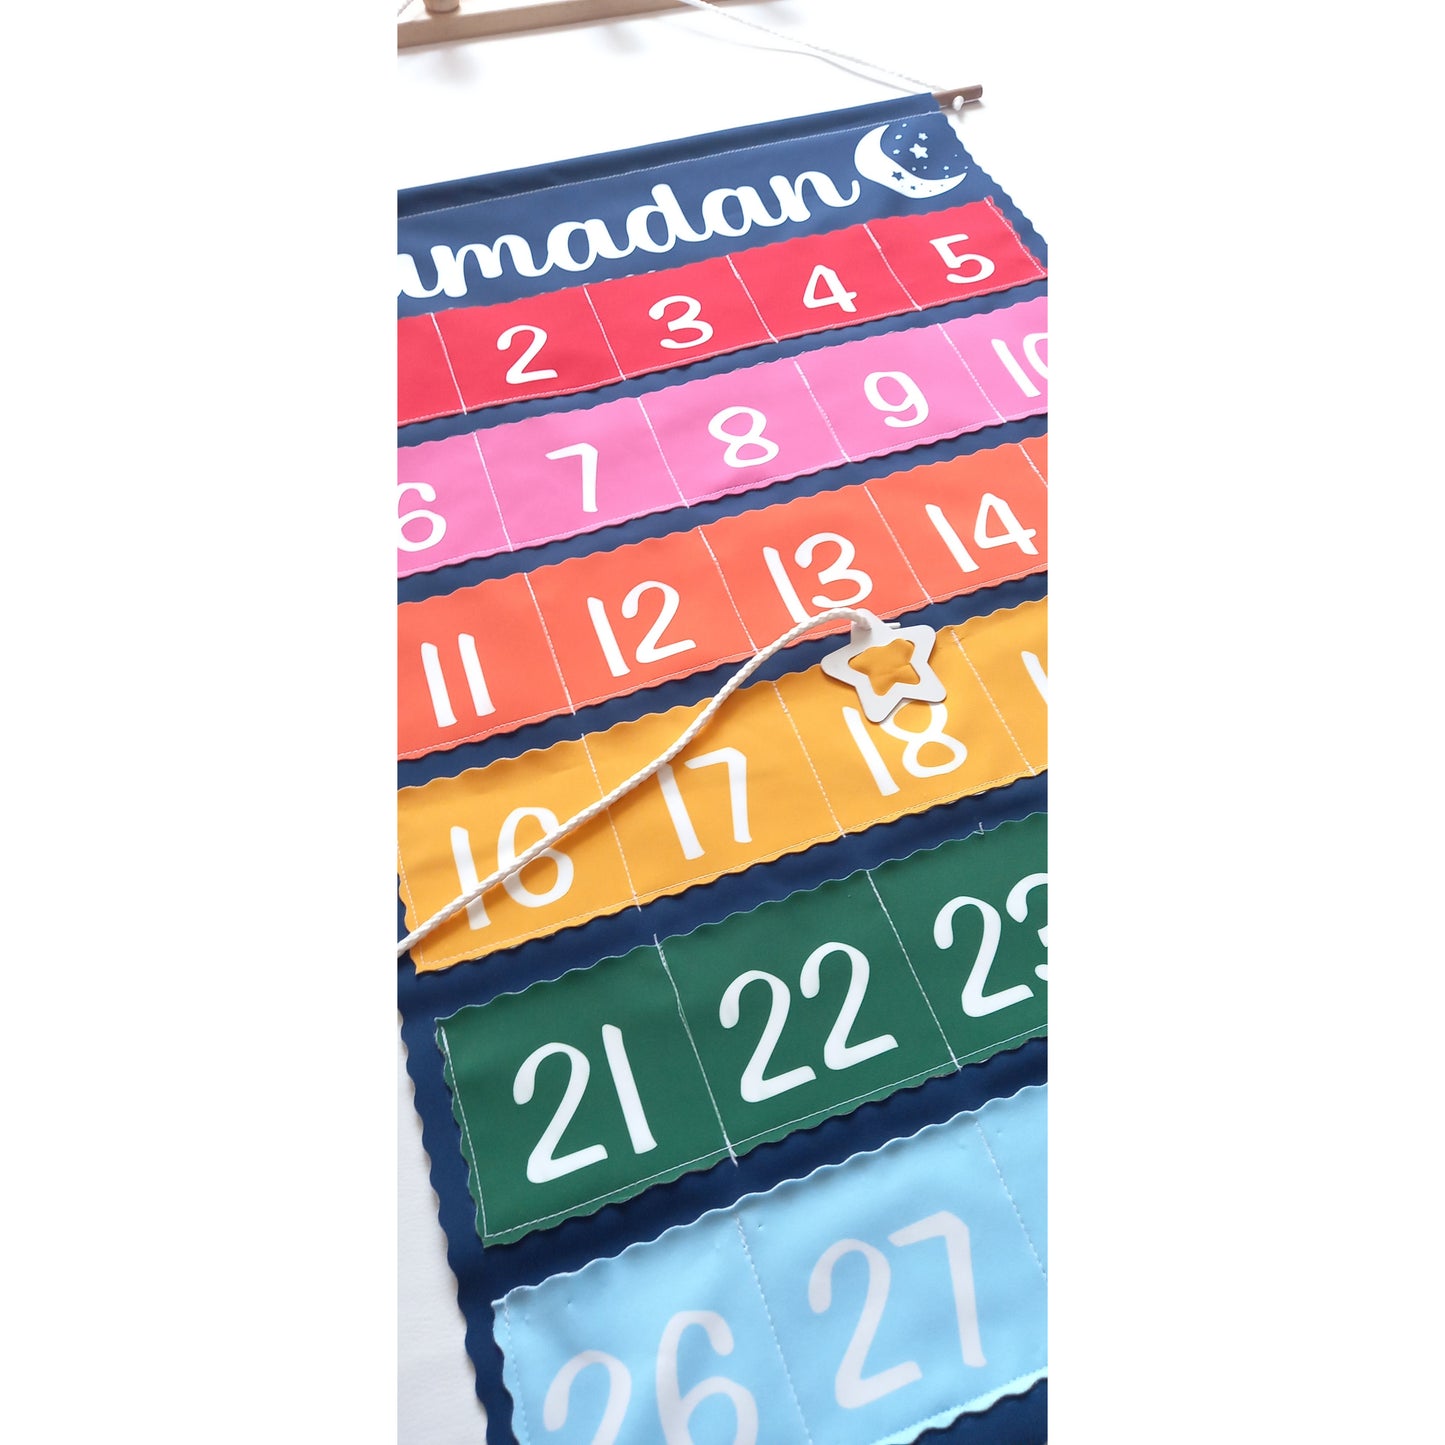 Handmade Colorful Ramadan Calendar (with Pockets)